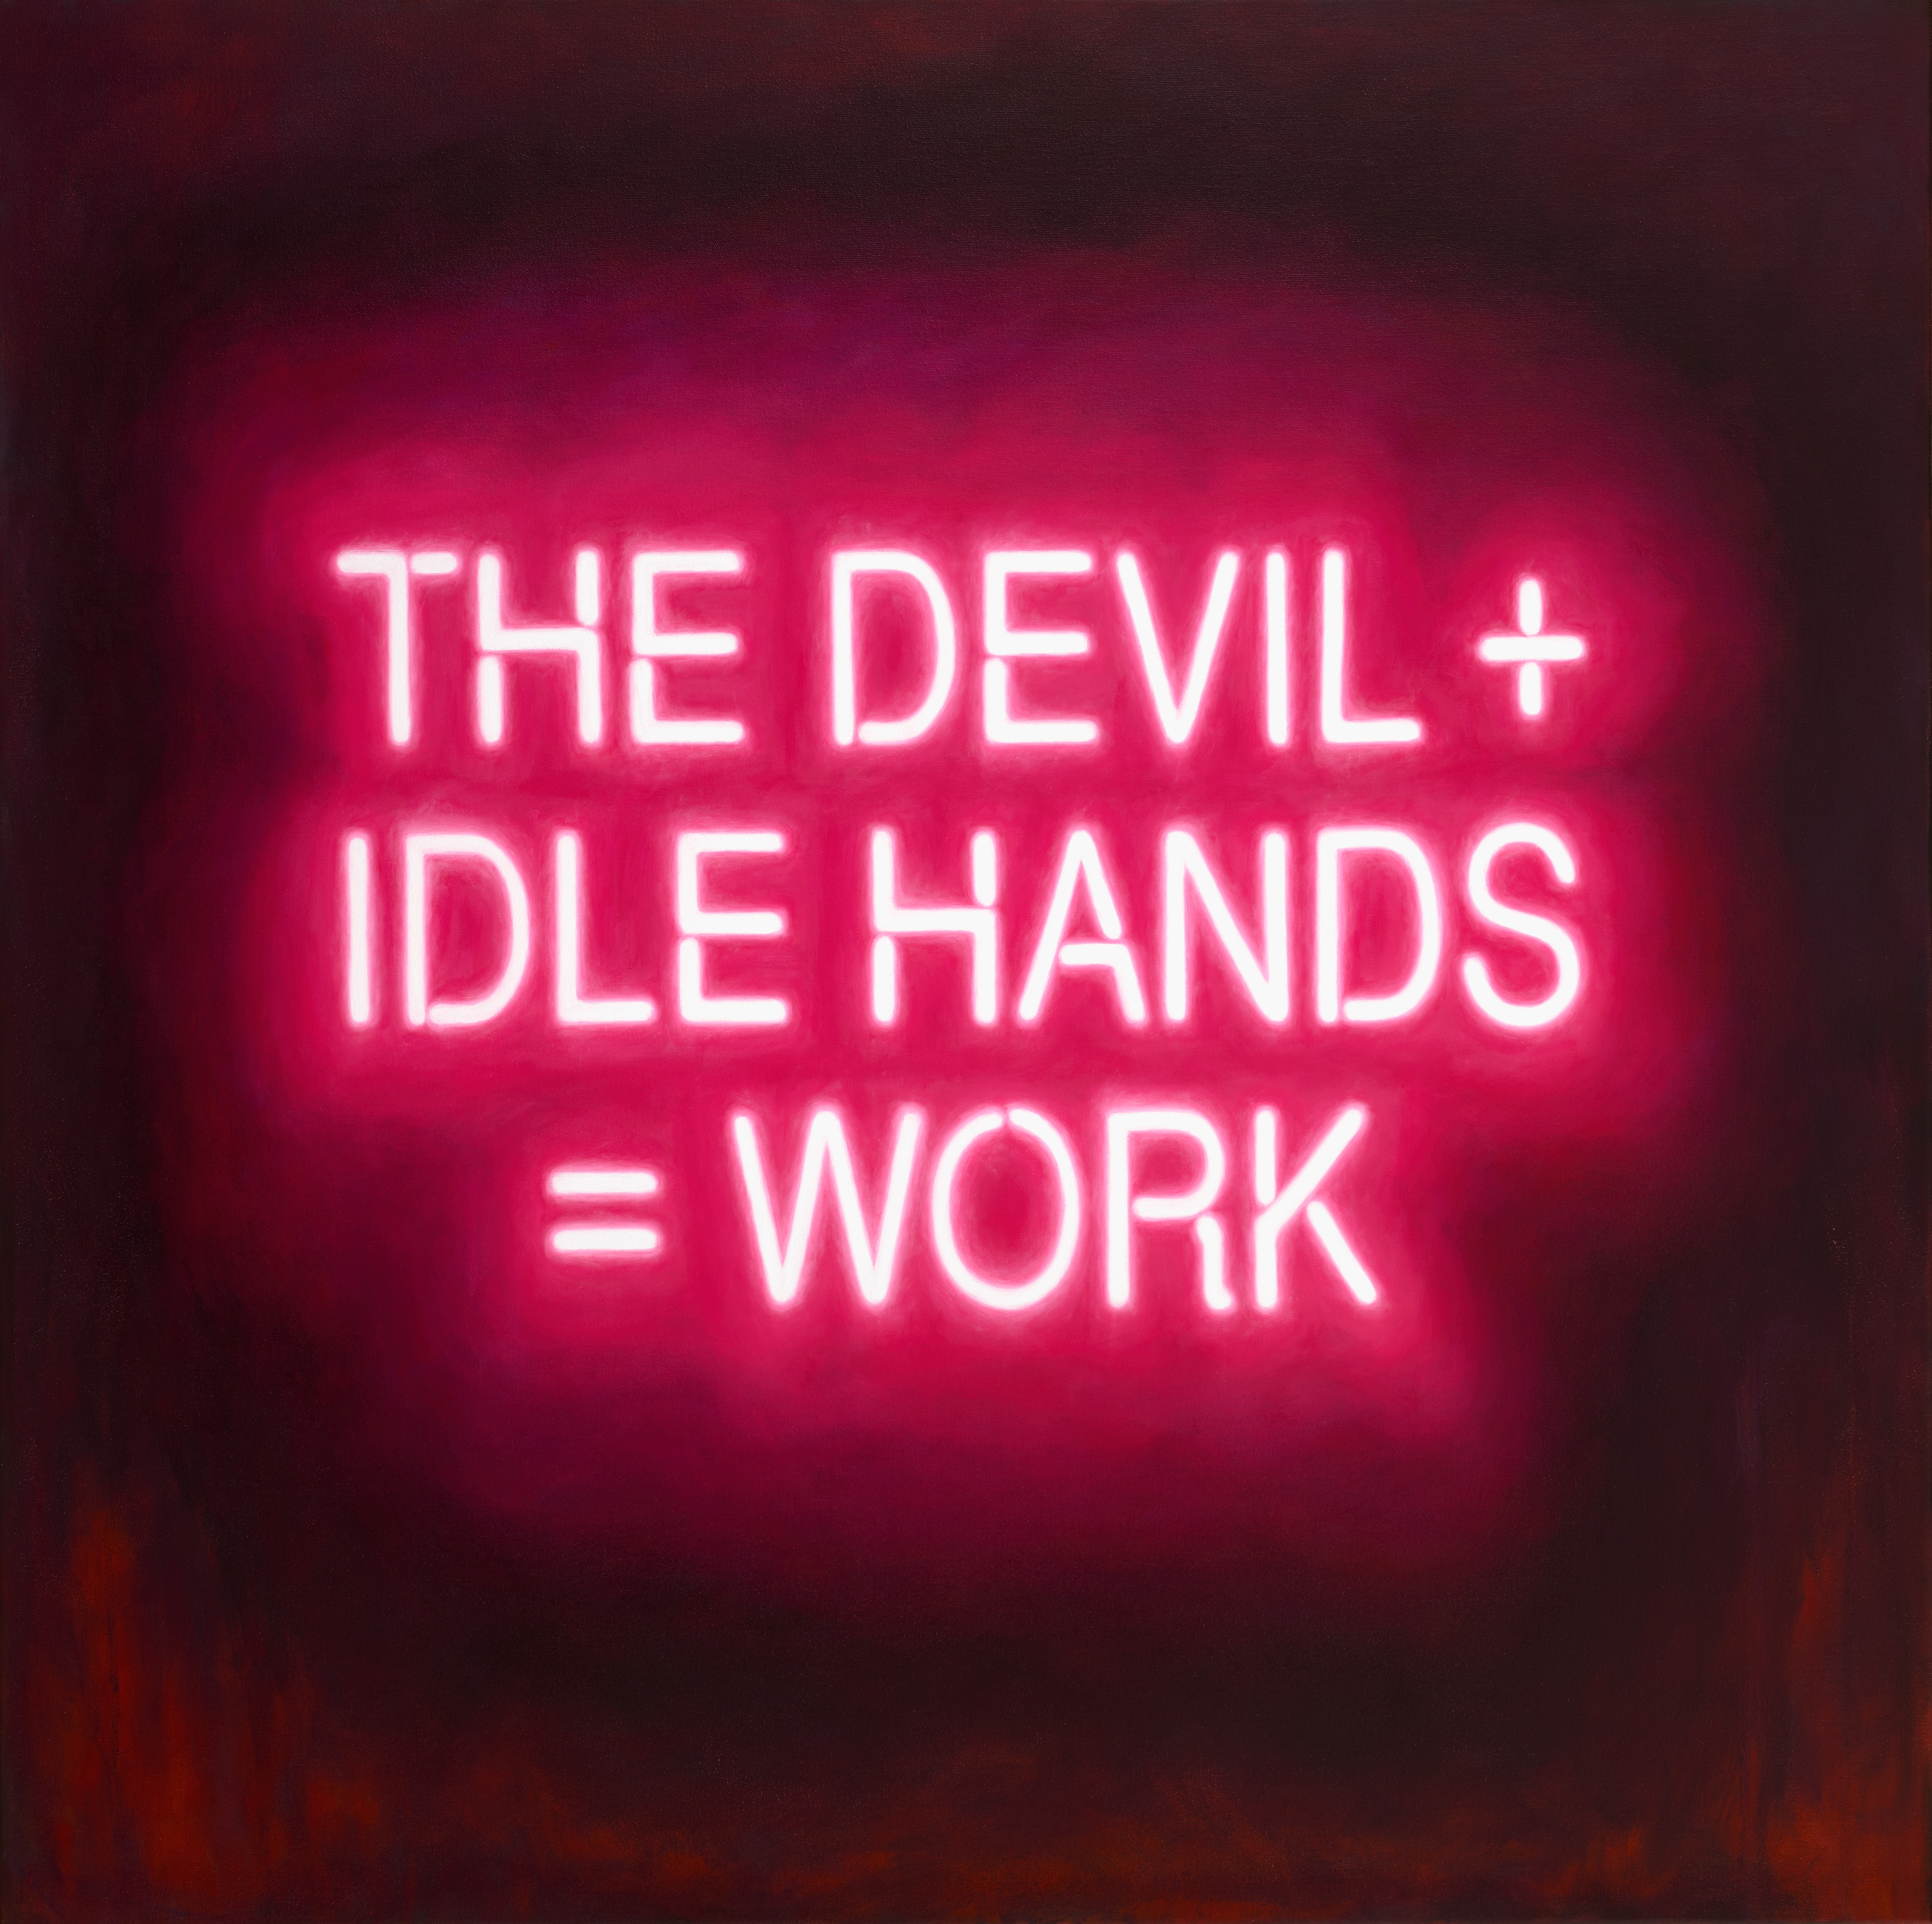 The Devil + Idle Hands, 2015, oil on canvas, 100cm x 100cm